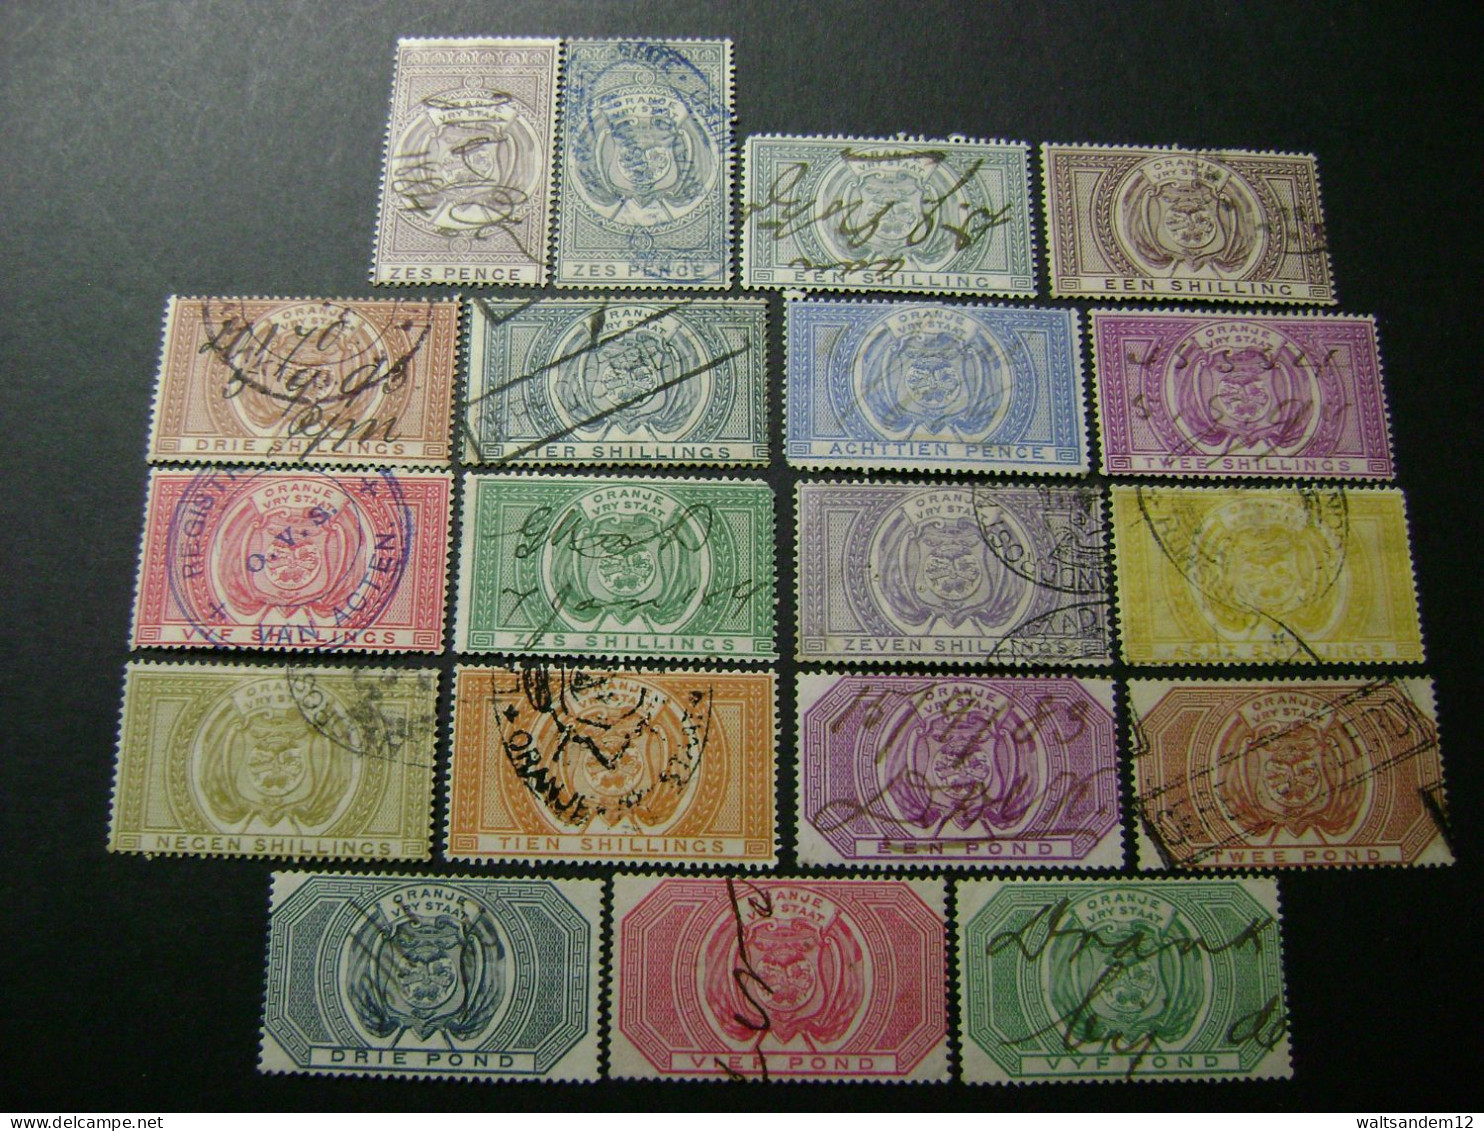 ORANGE FREE STATE 1878-1882 Complete Set Of Used Revenues (19 Stamps) - Orange Free State (1868-1909)